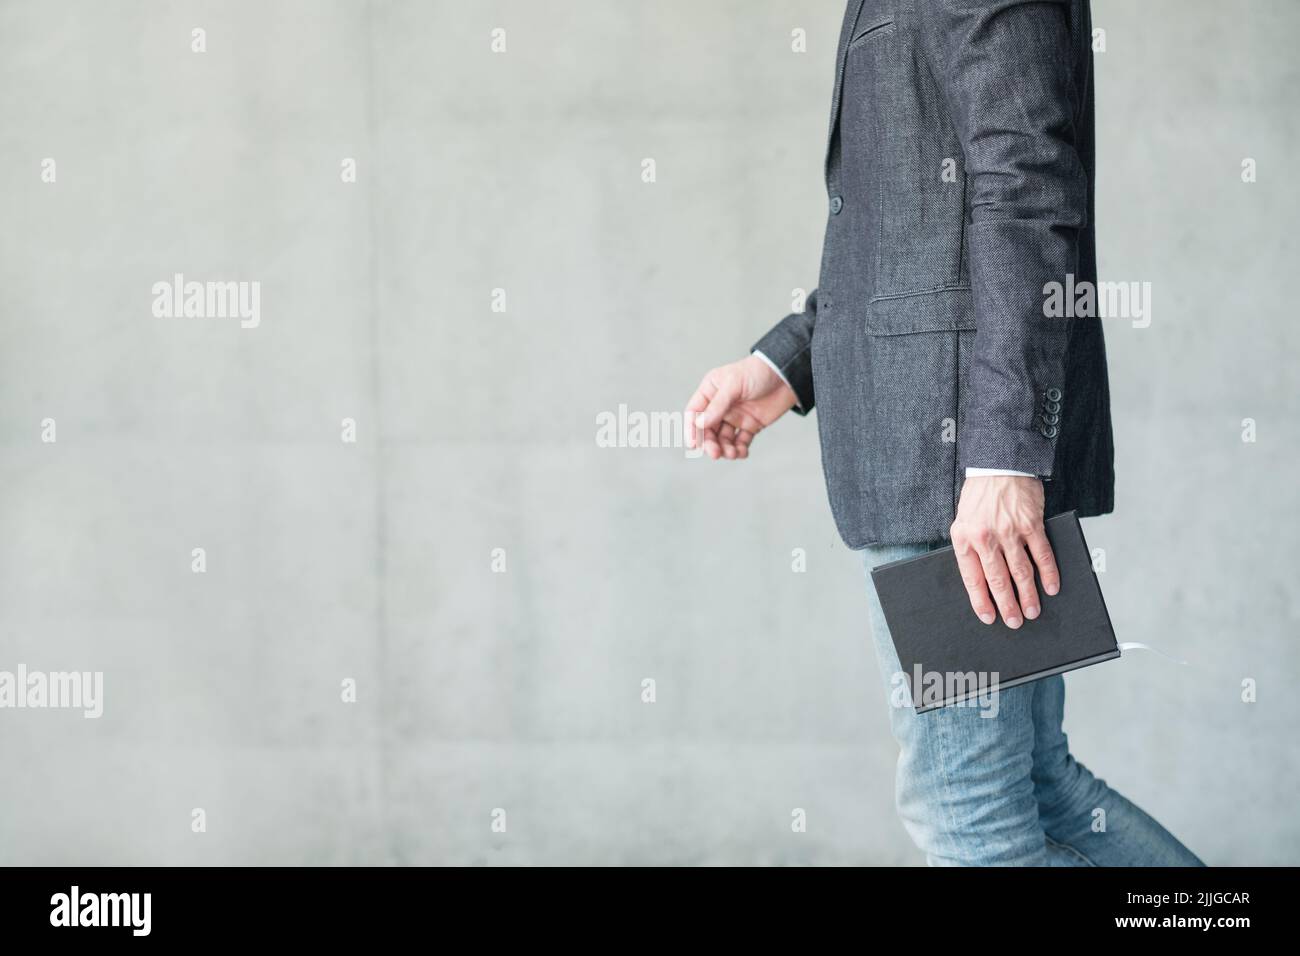 Business man Walking elegant lässig Mode-Stil Stockfoto